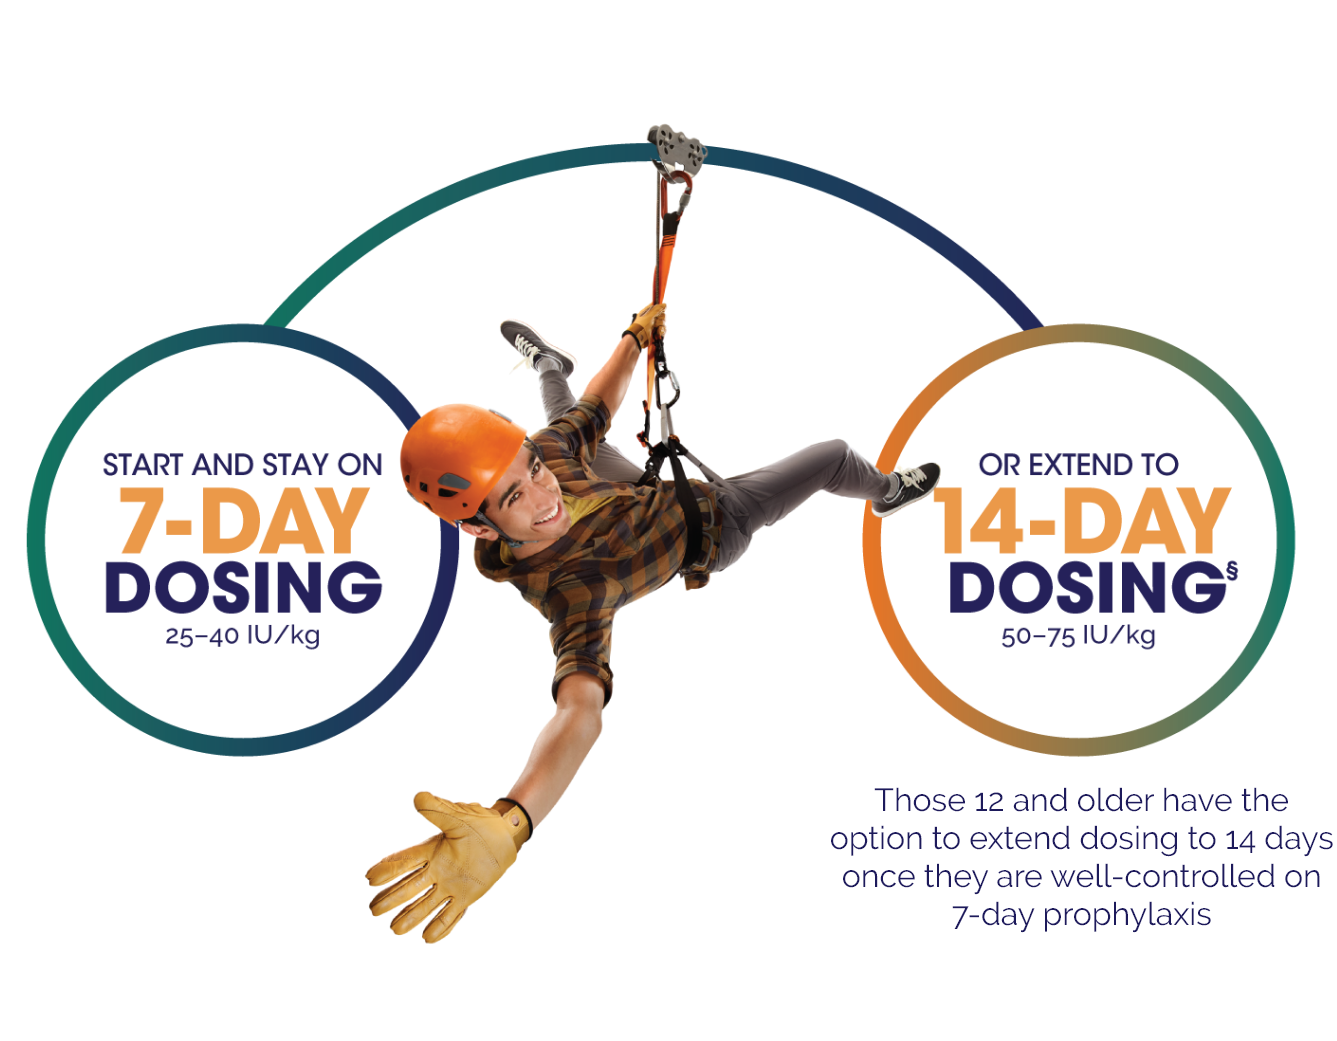 Zipliner—Start and stay on 7-day dosing